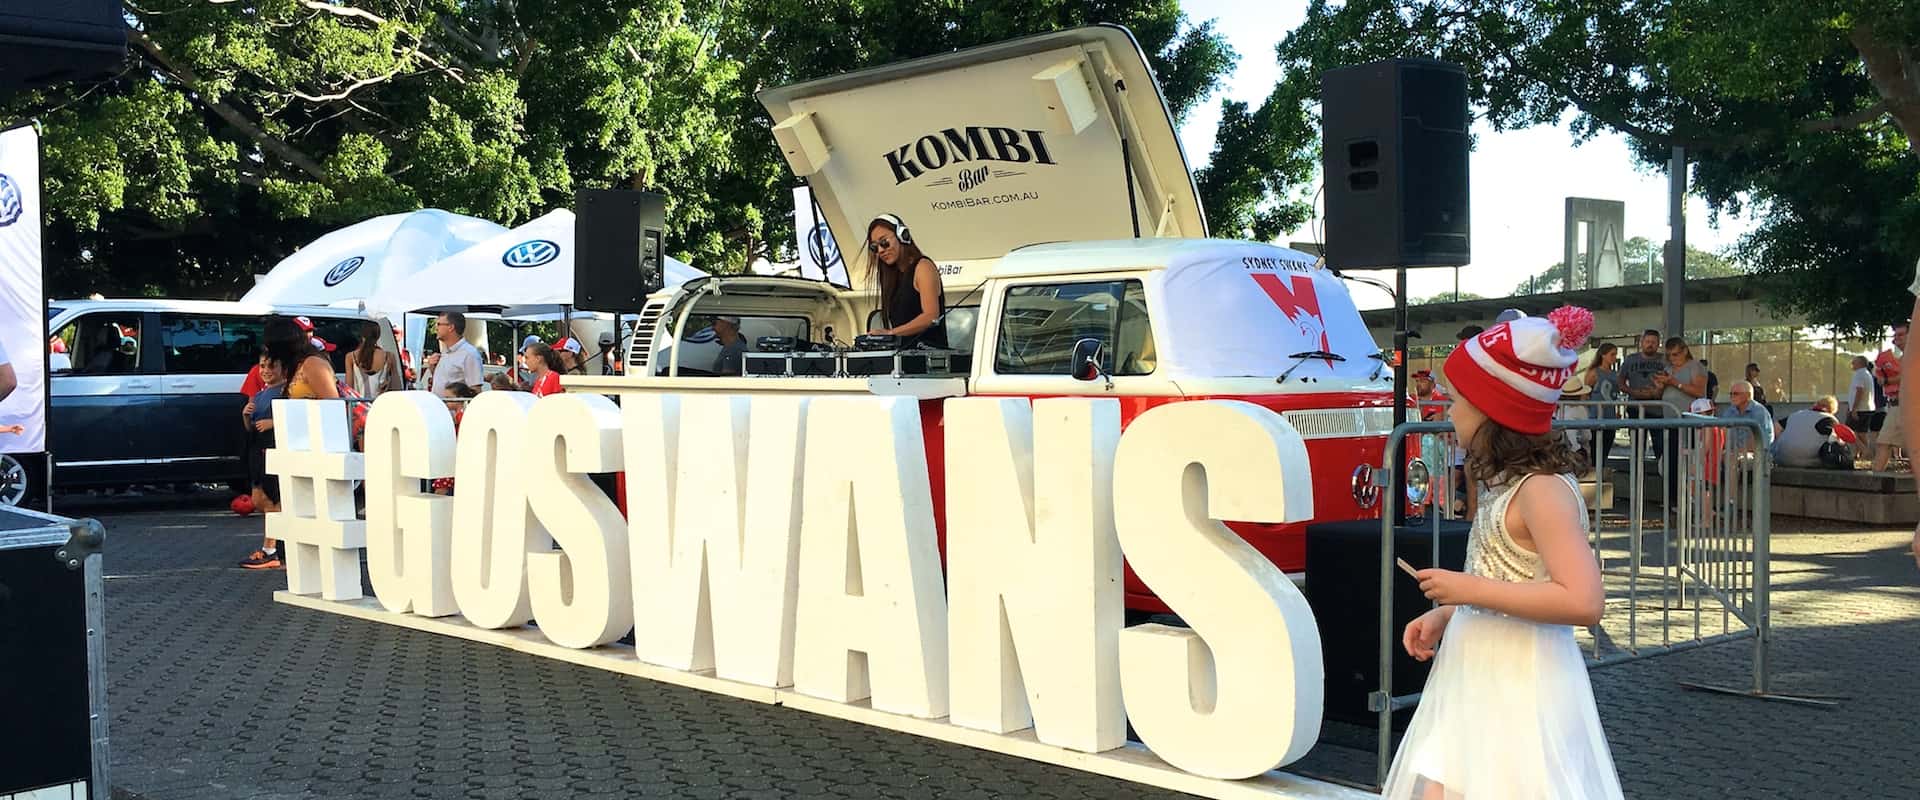 Kombi DJ Sydney Swans